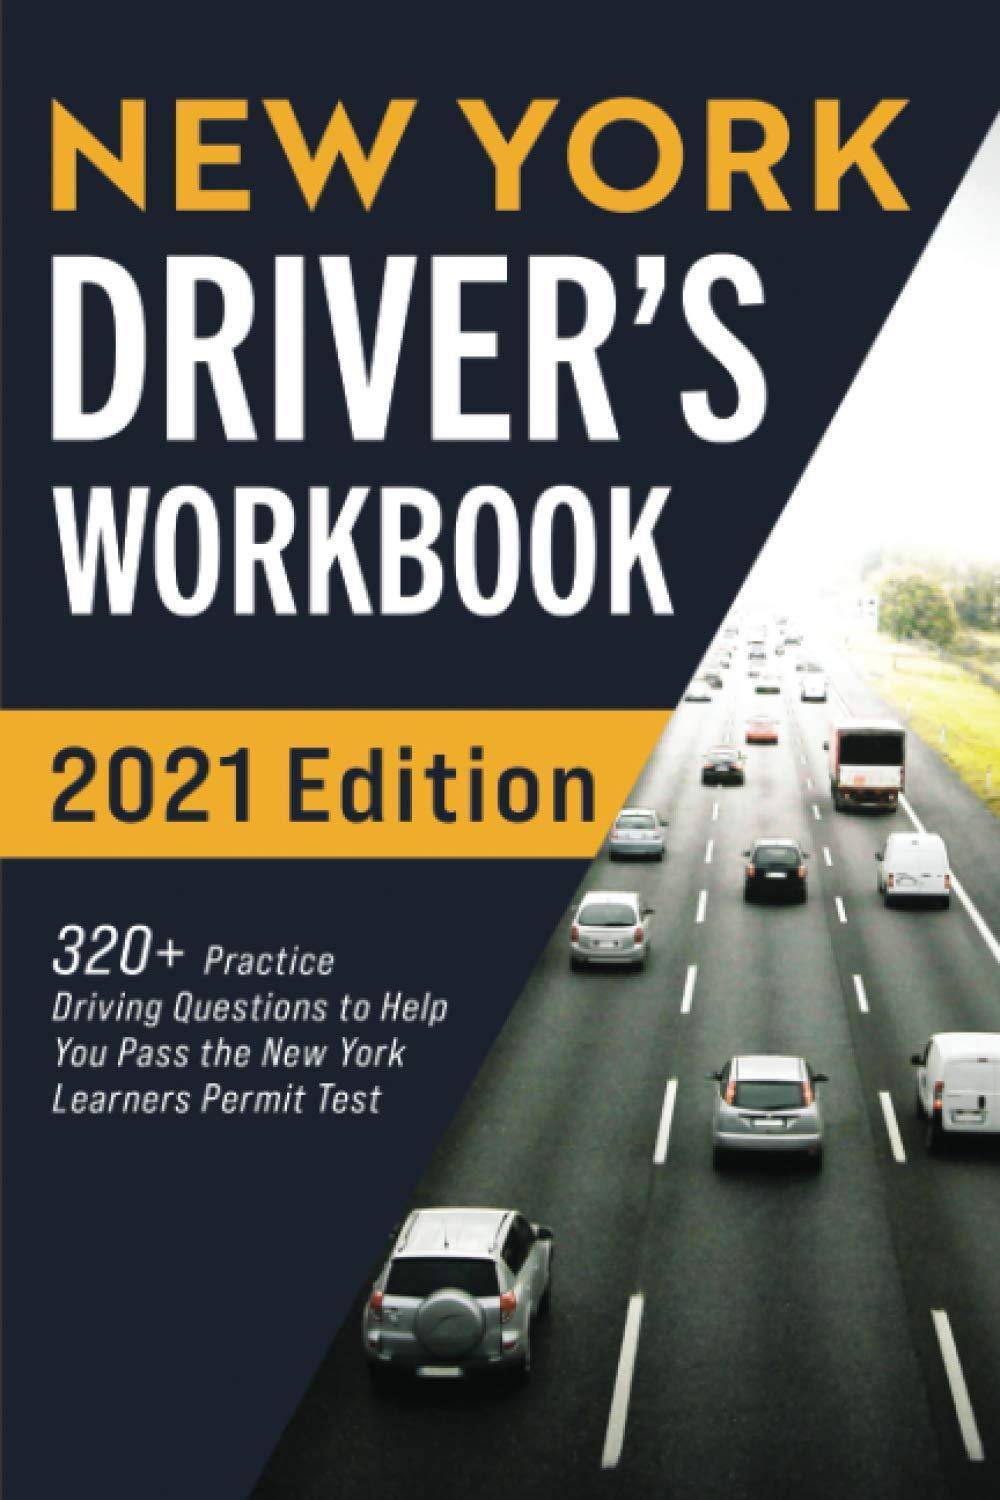 New York Driver’s Workbook - SureShot Books Publishing LLC